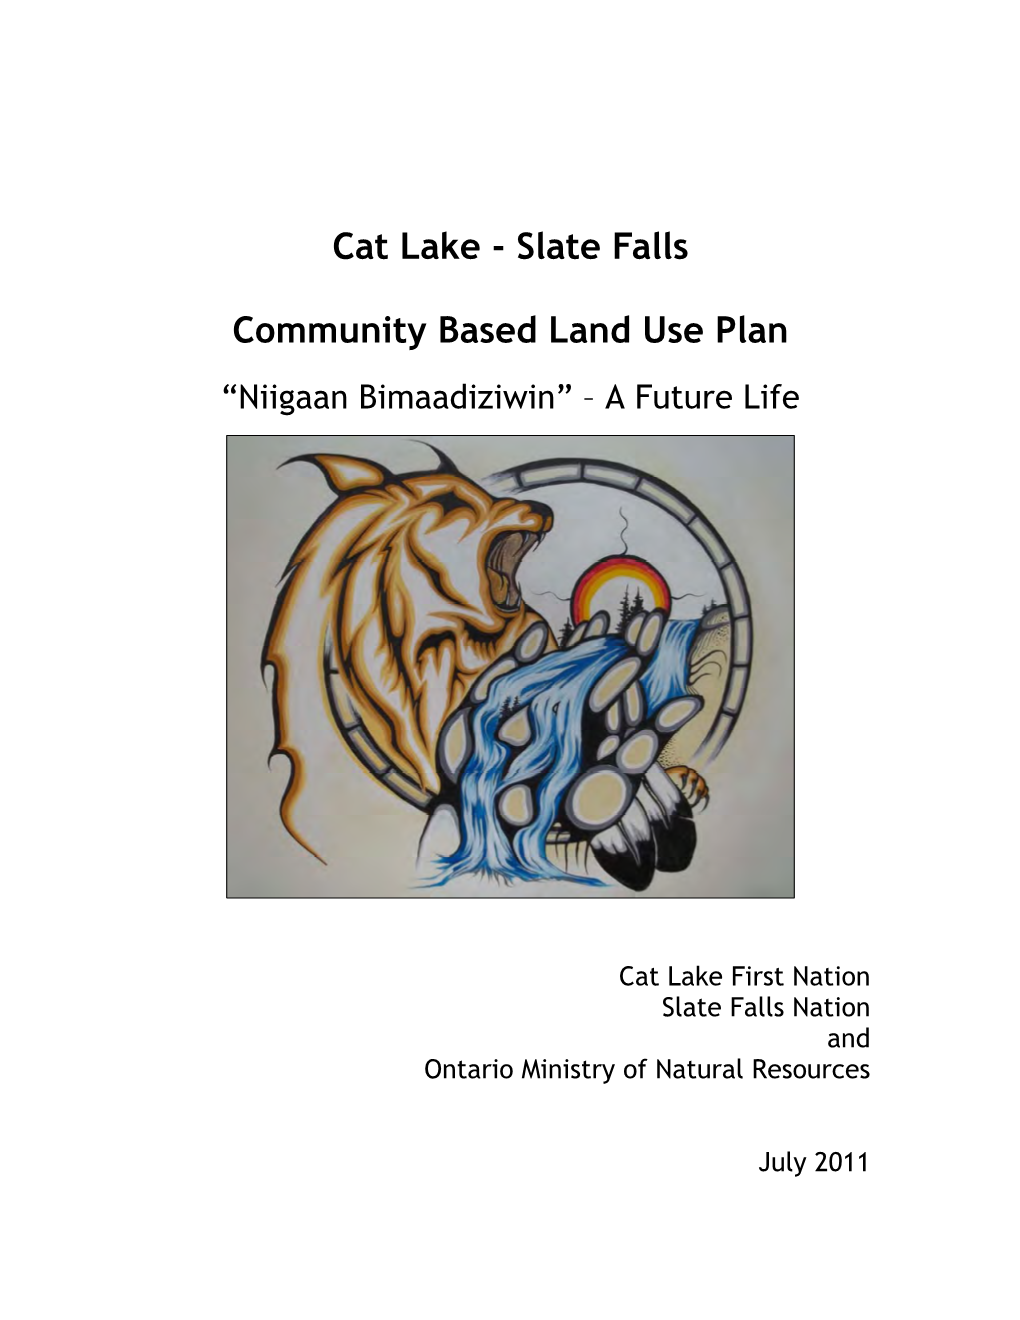 Cat Lake-Slate Falls Community Based Land Use Plan